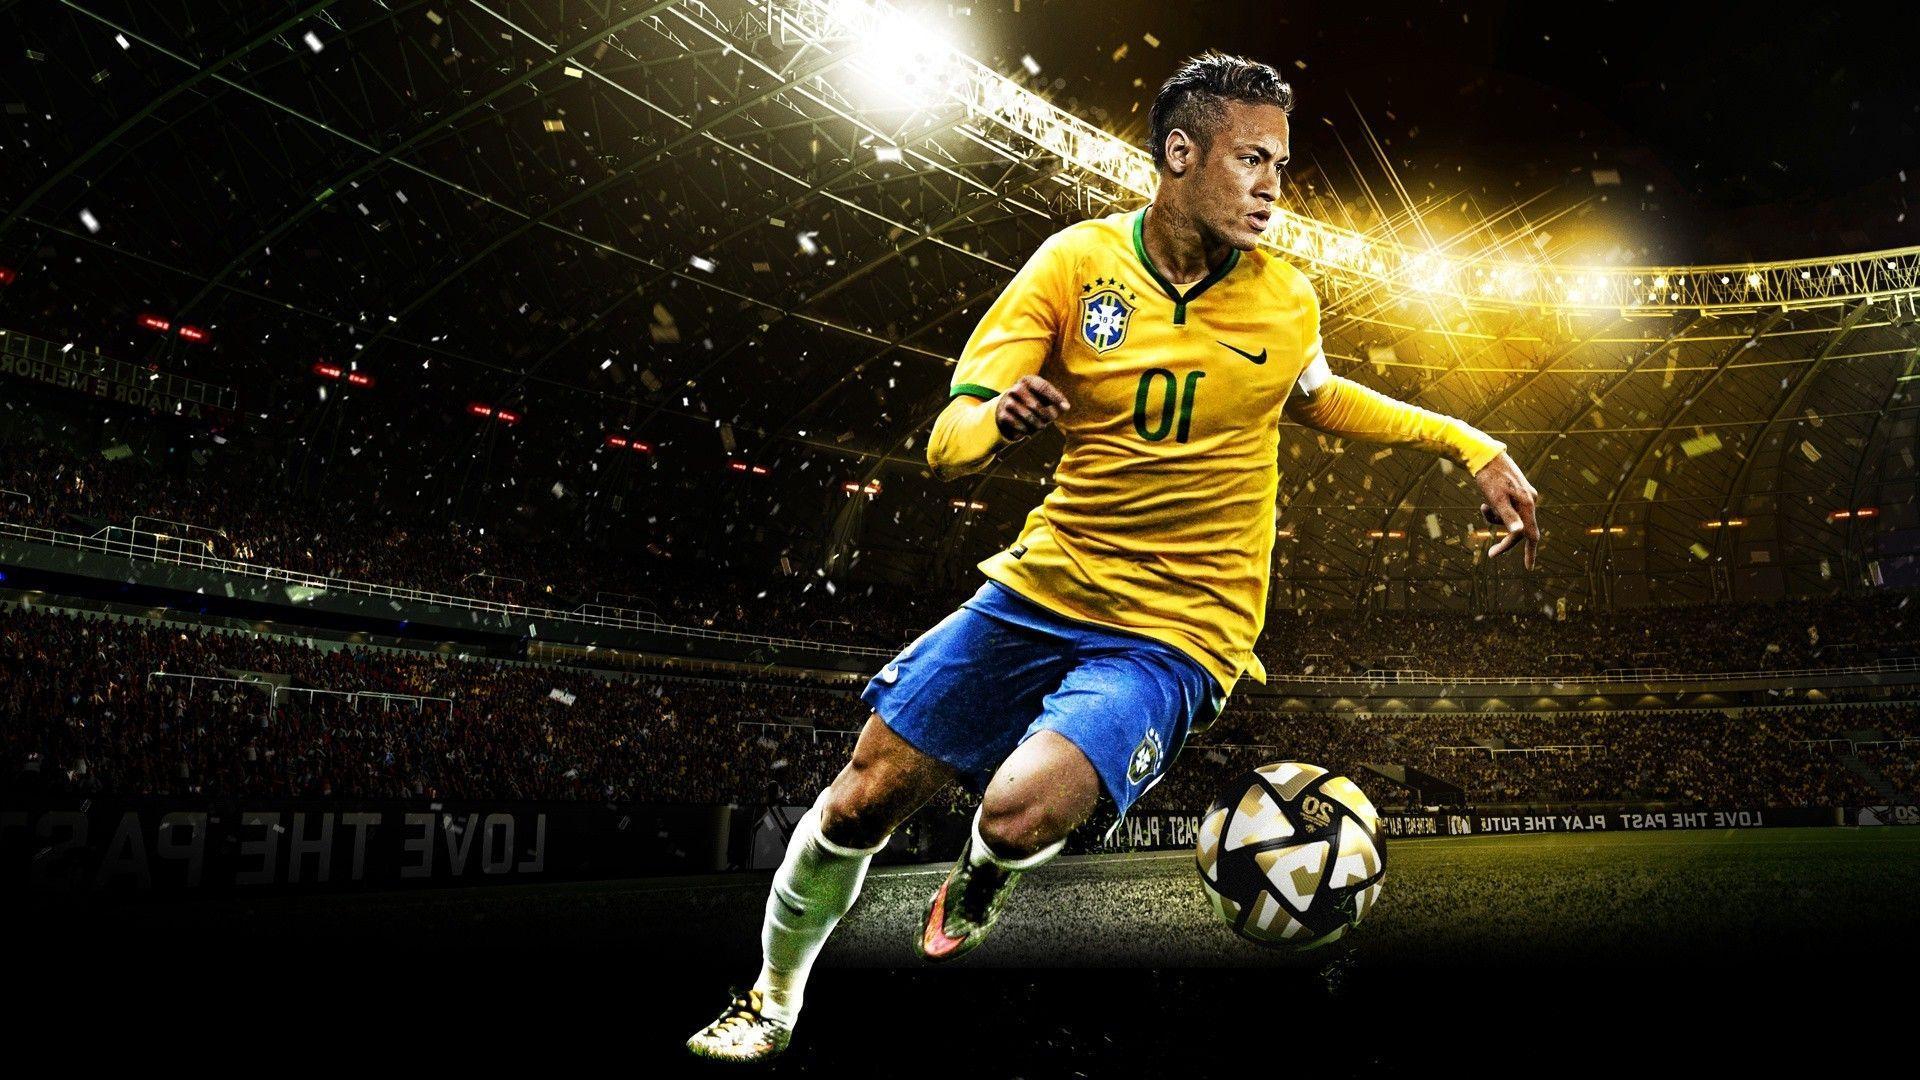 Neymar Pes 2016 Football Player 4k Full HQ Wallpaper Wallpaper